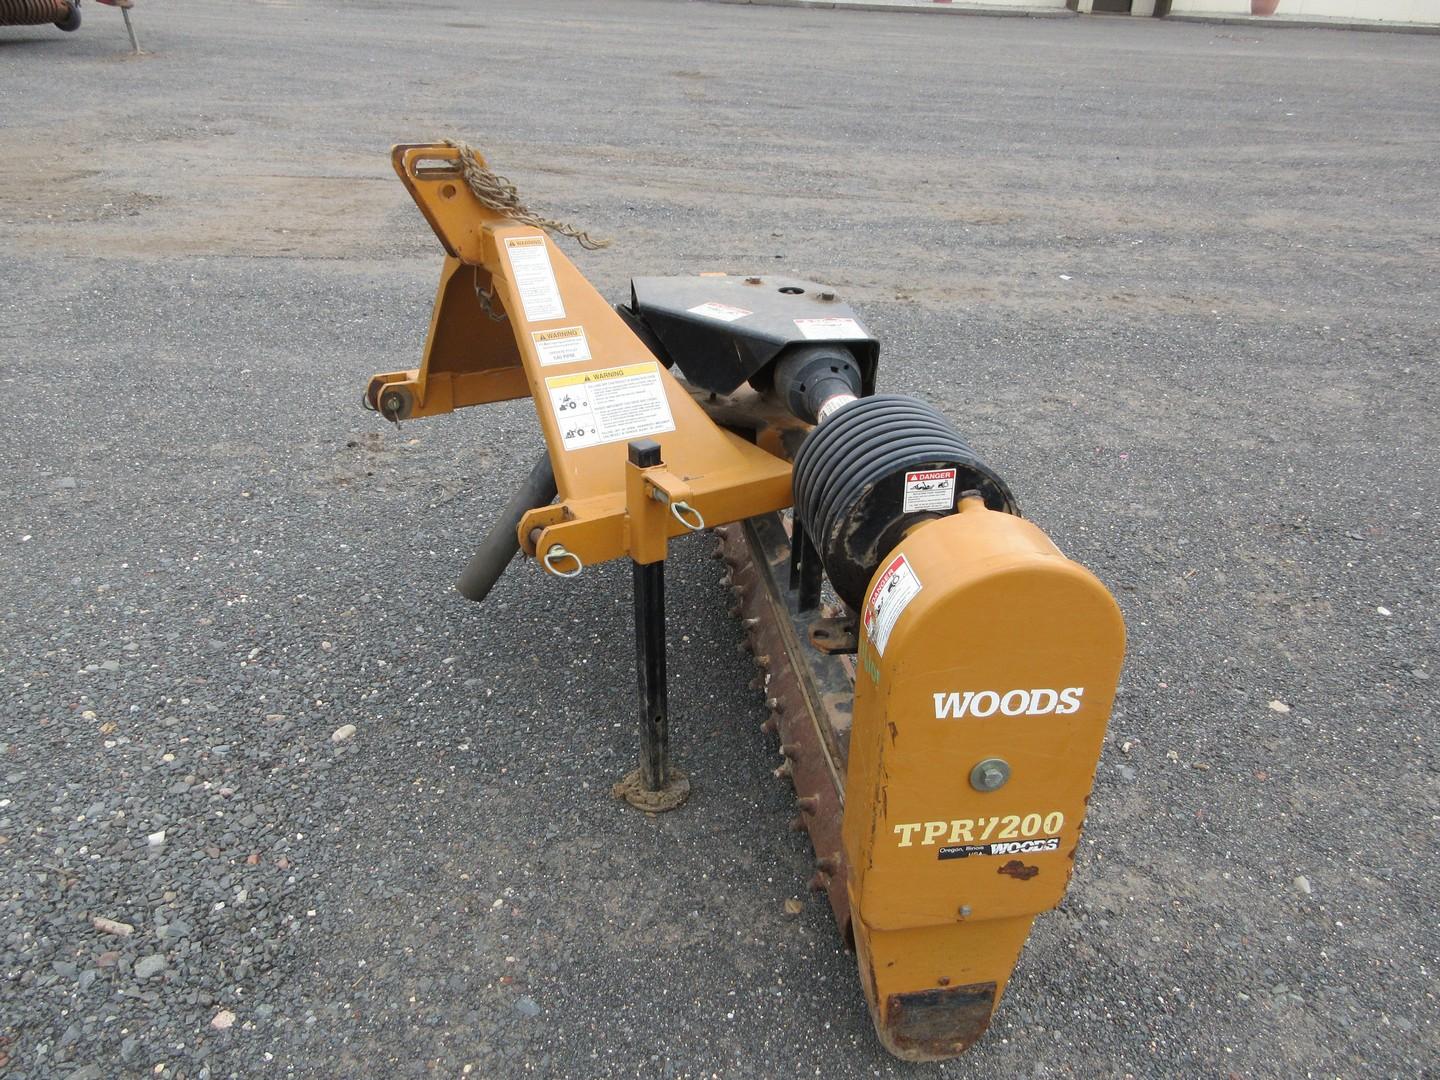 Woods TPR7200 Power Rake Attachment